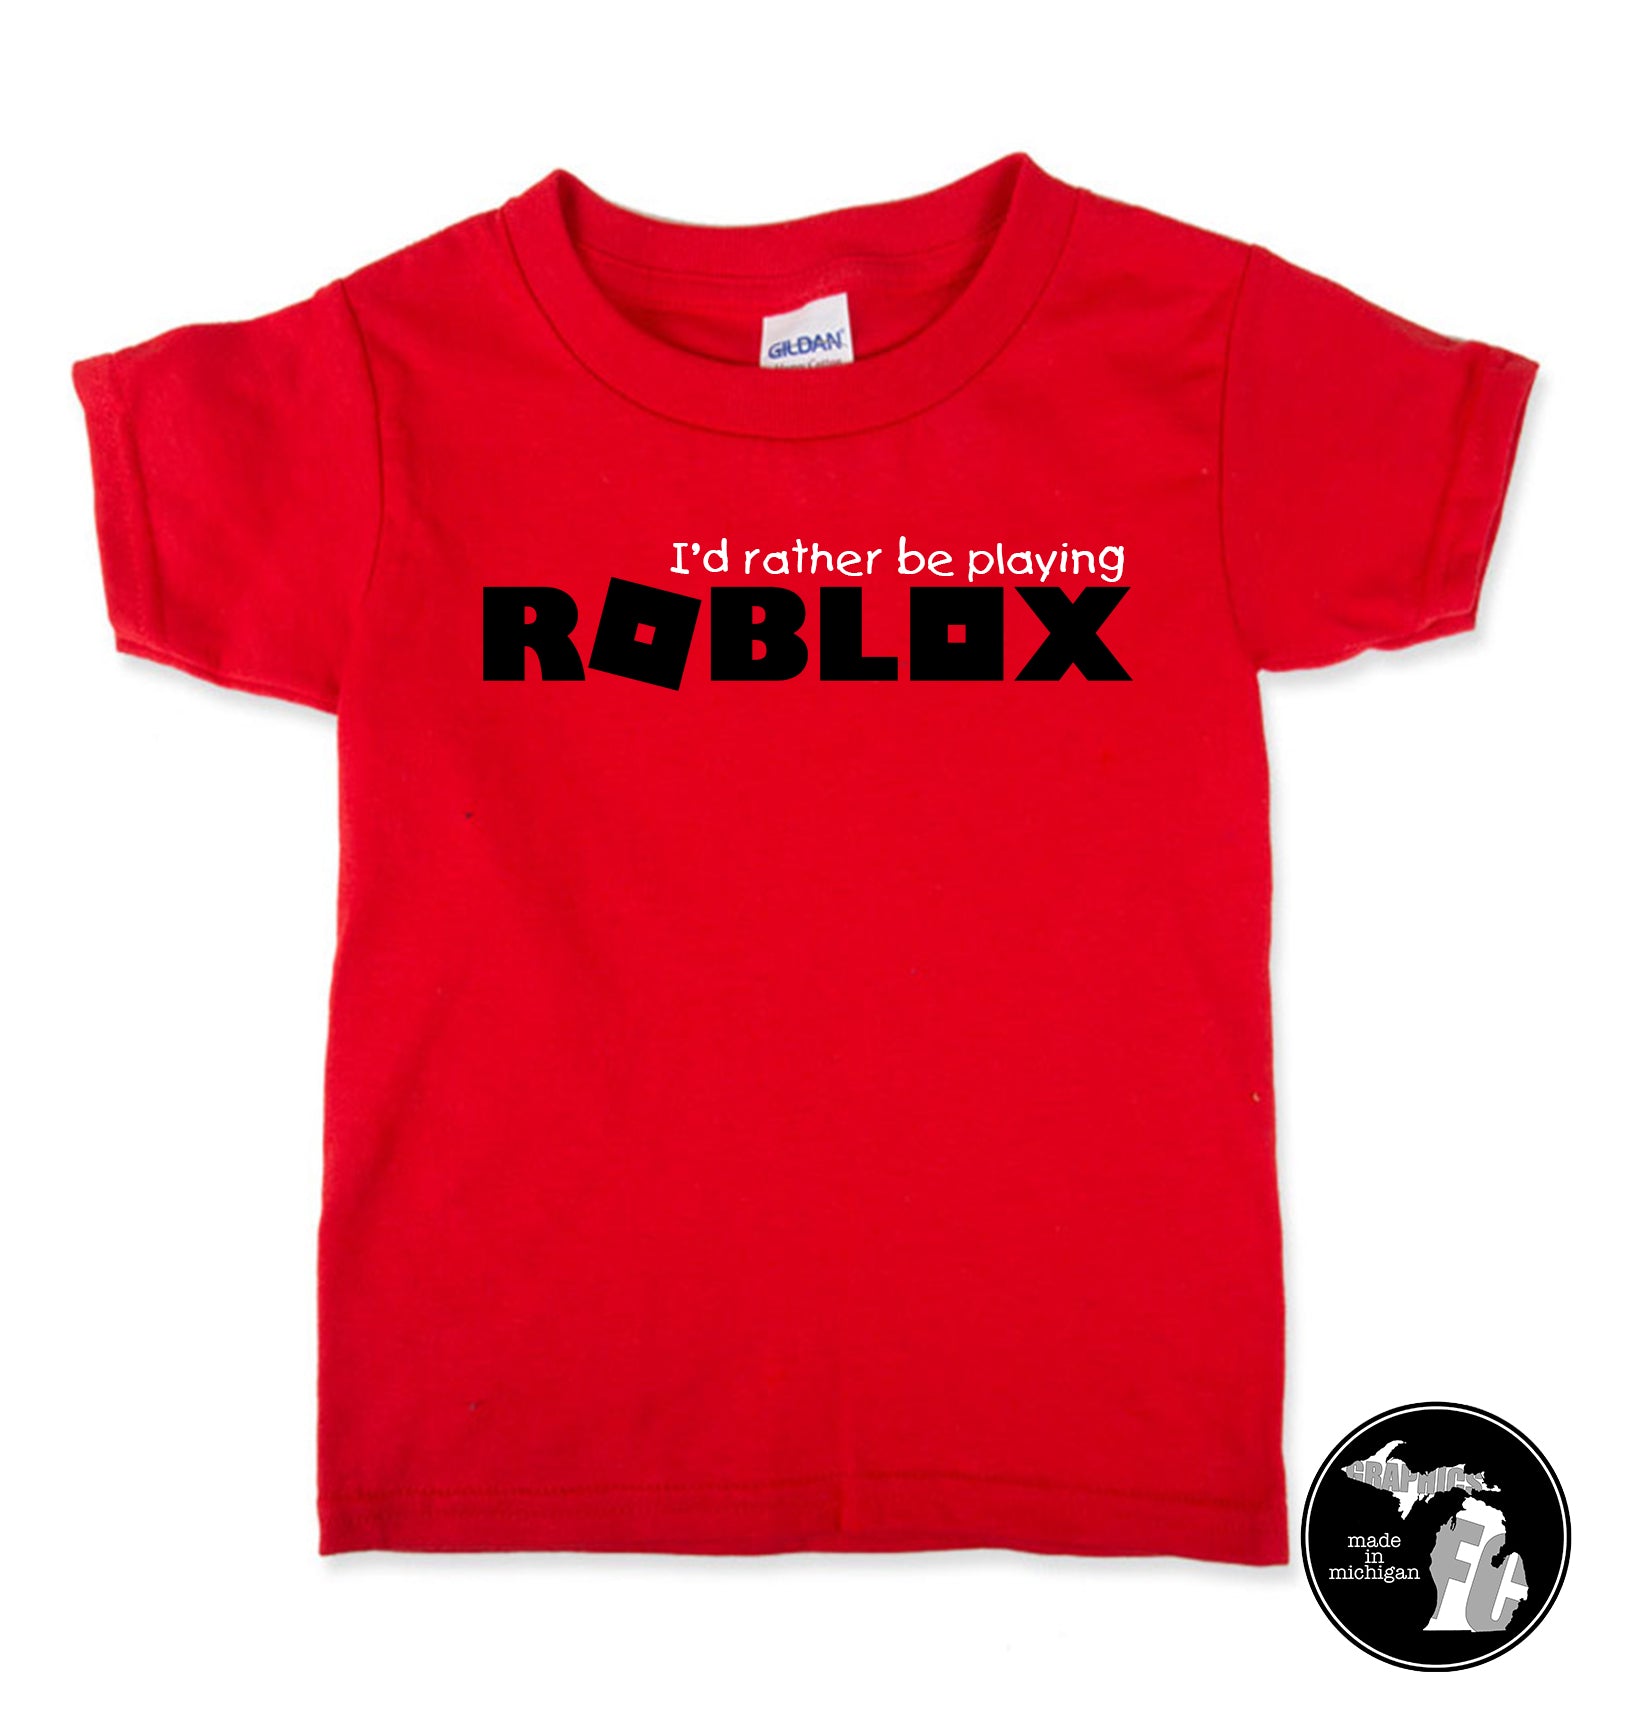 Name - Roblox